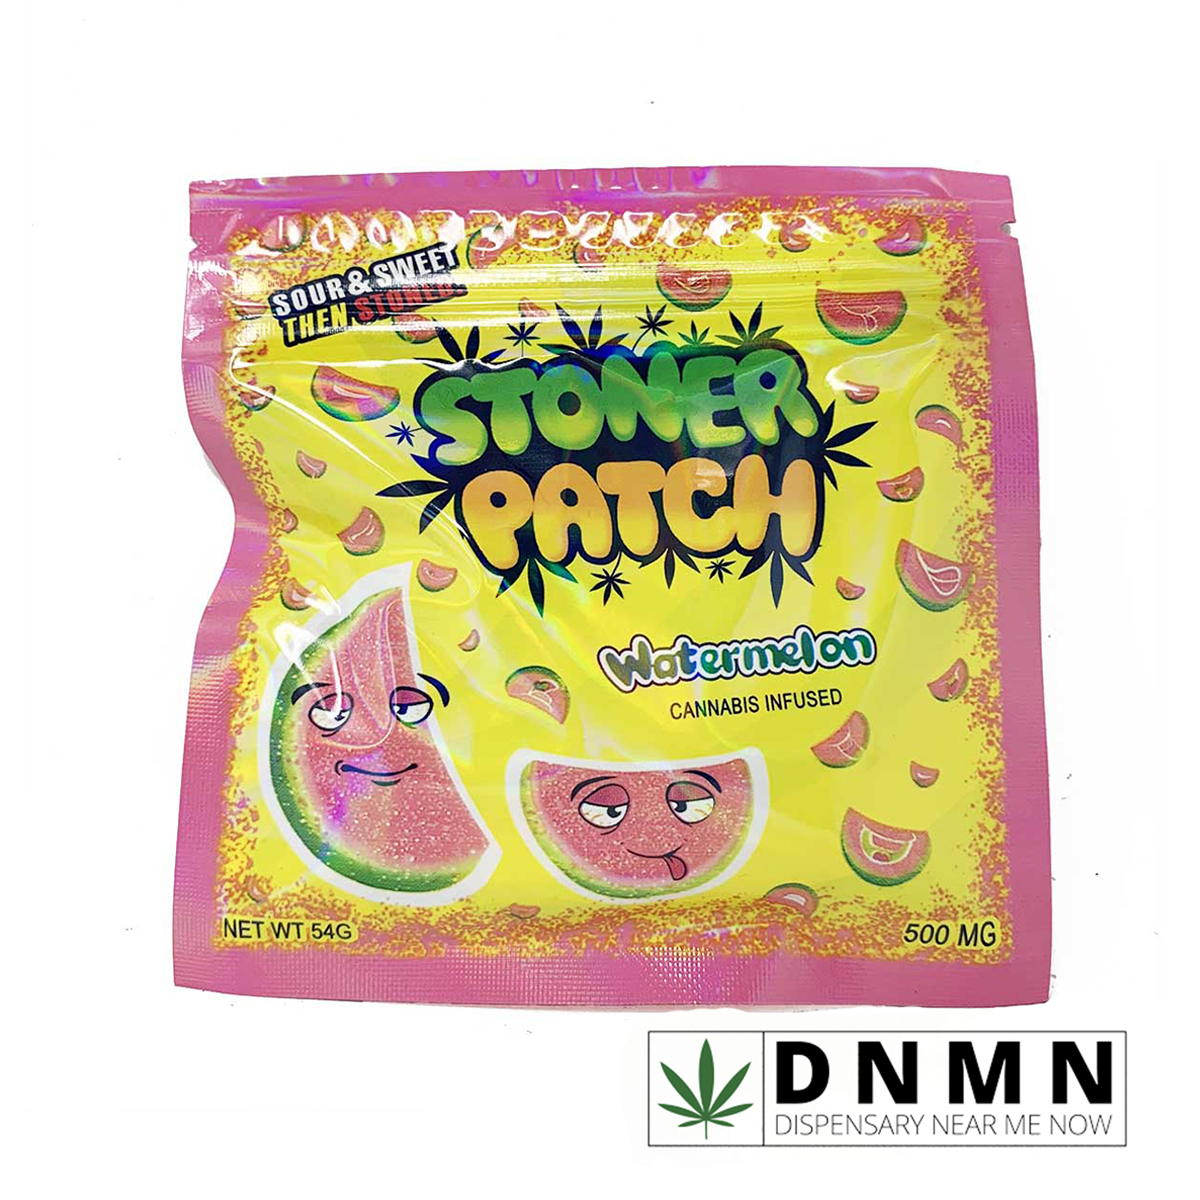 Stoner Patch Dummies – Watermelon | Buy Edibles Online | Dispensary Near Me